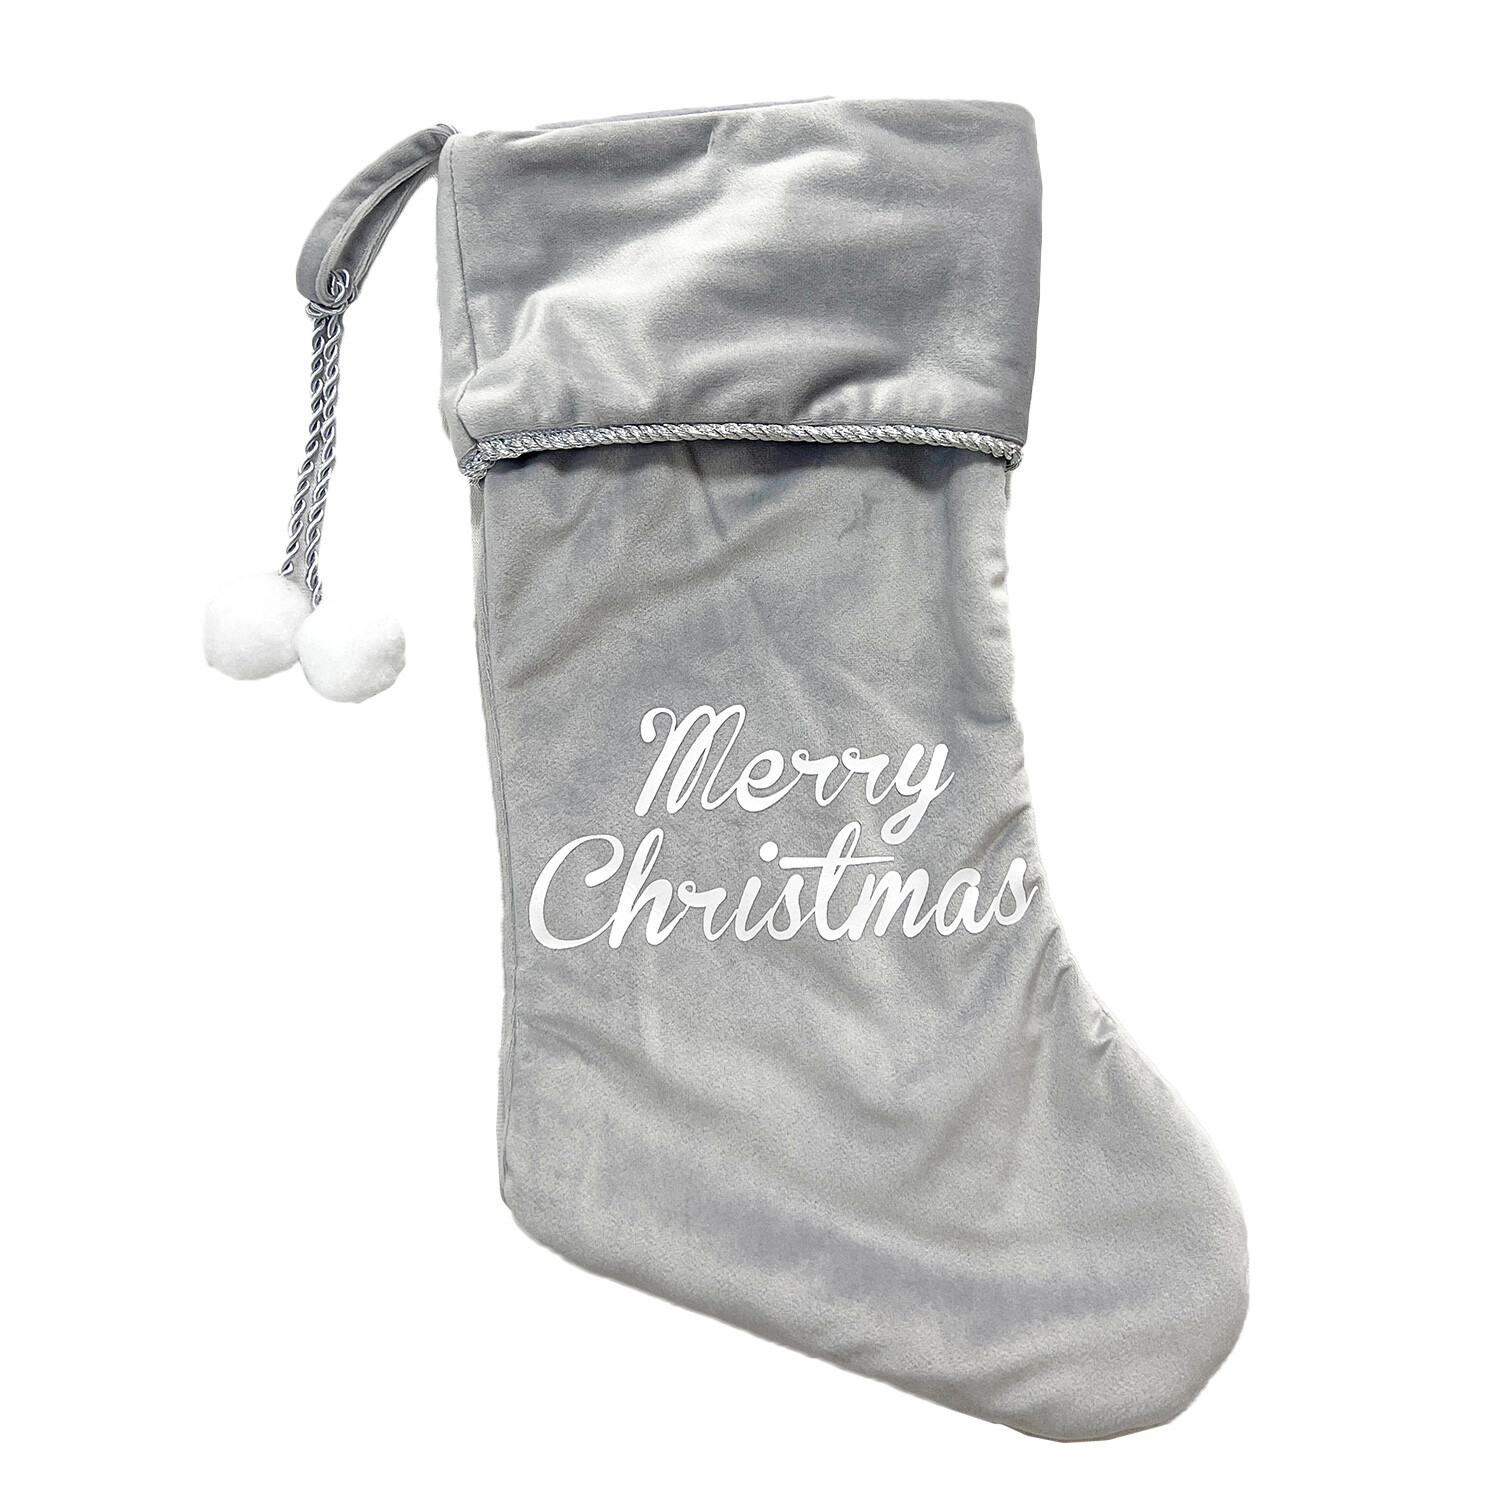 Merry Christmas Stocking - Grey Image